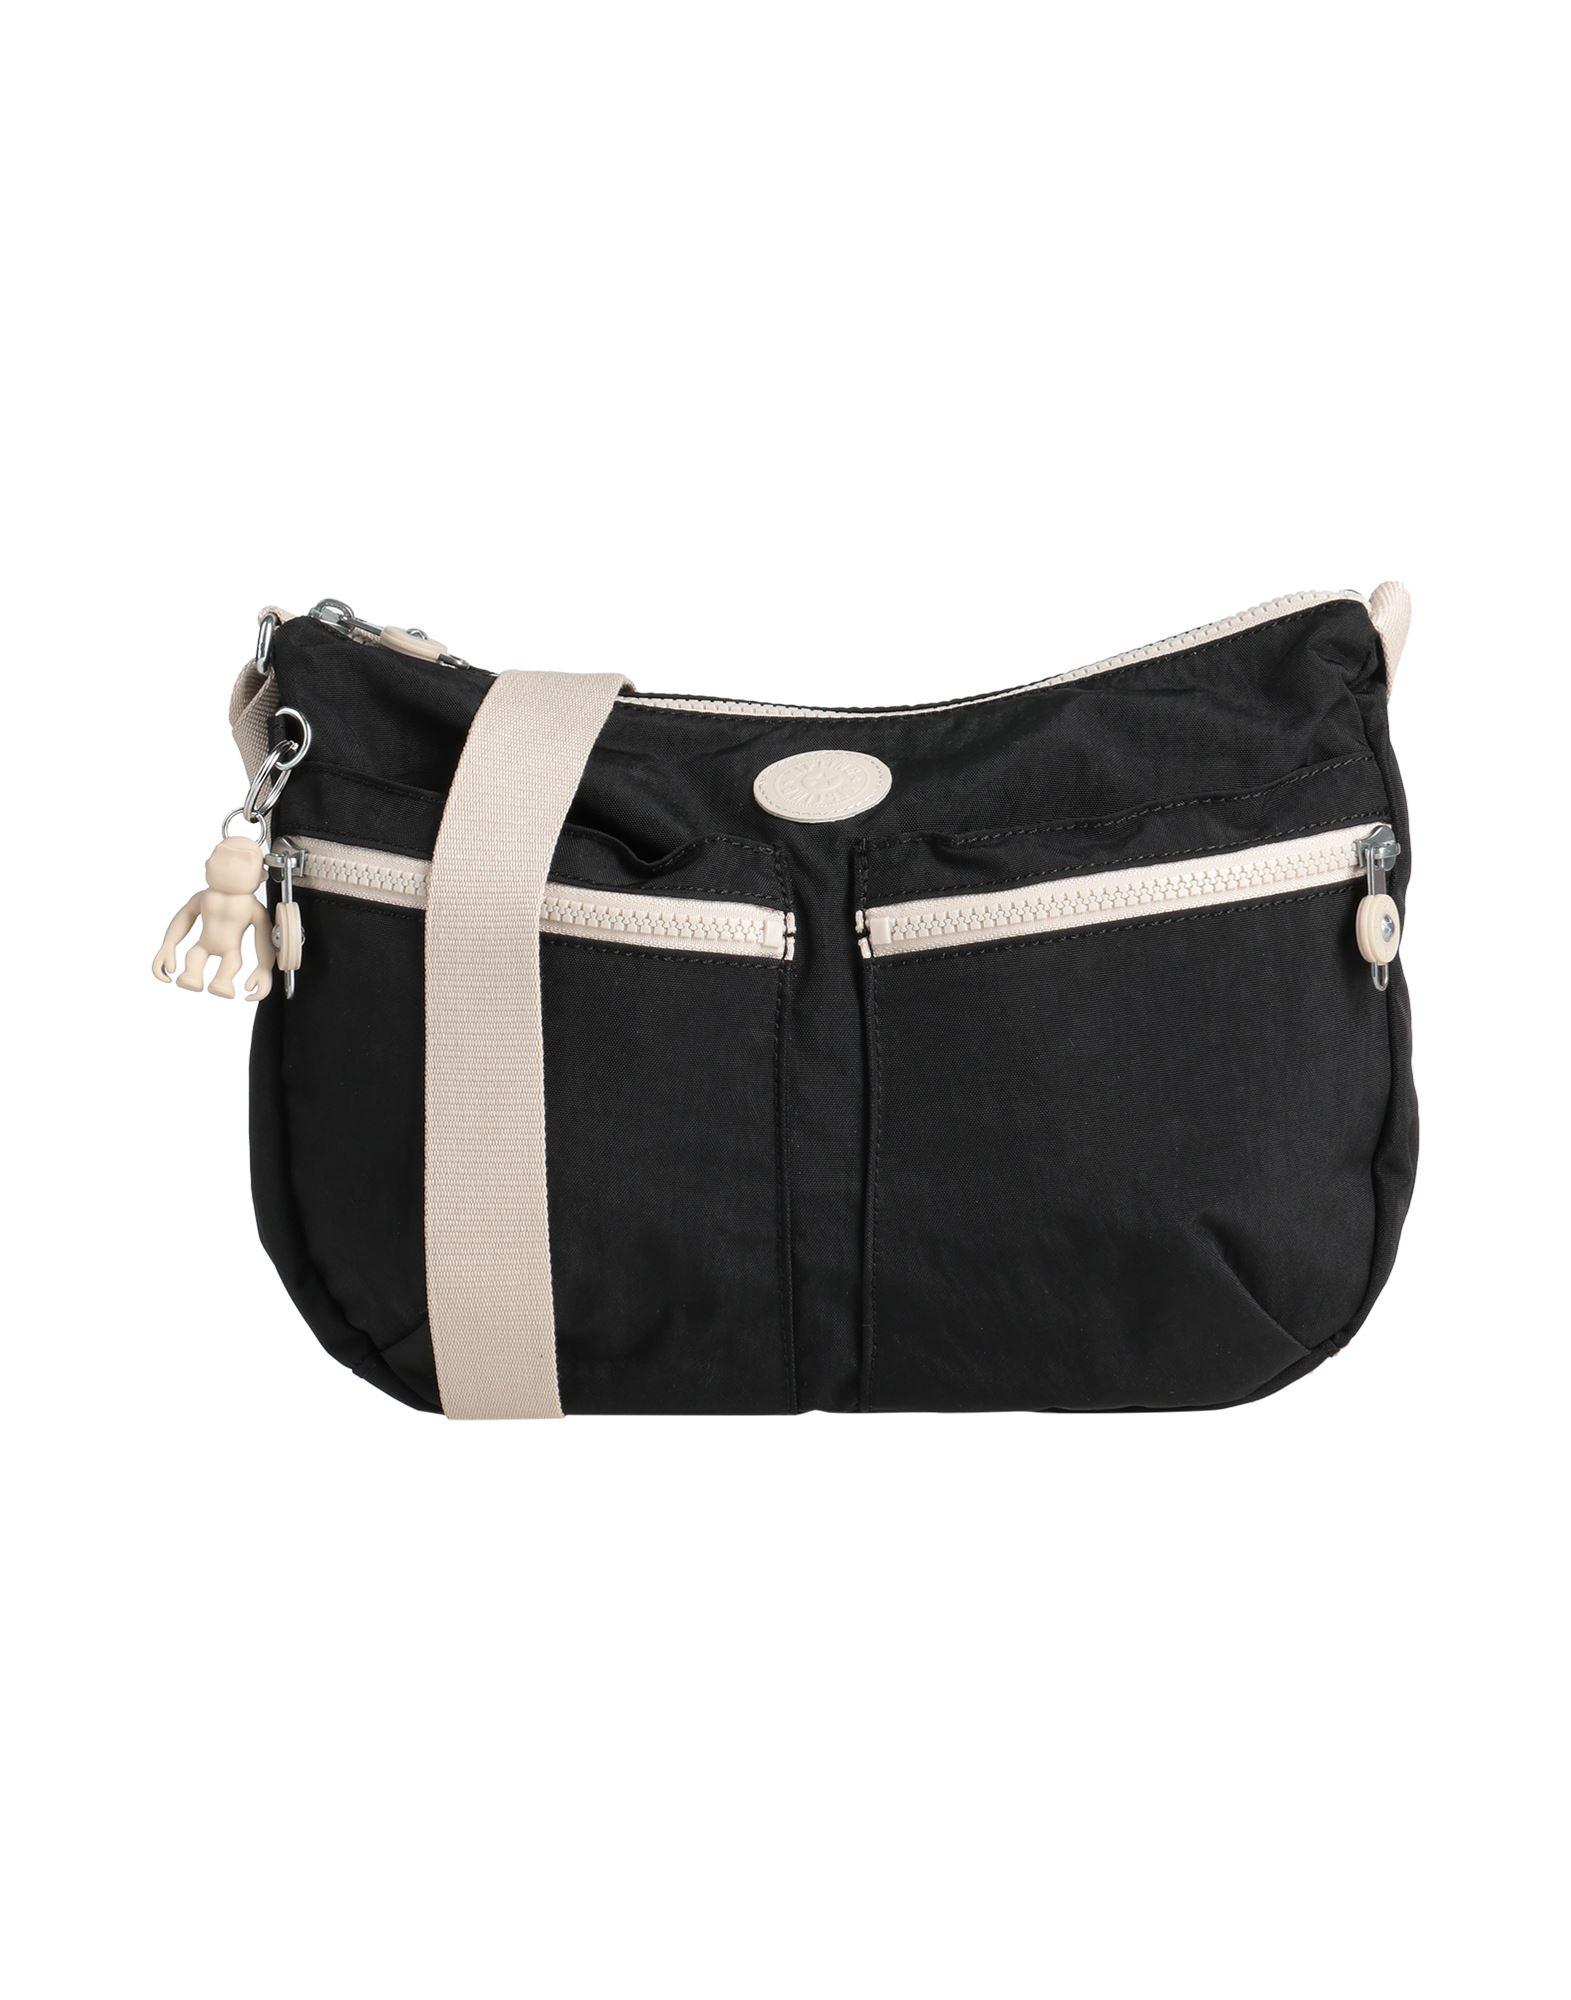 Kipling Cross-body Bag in Black | Lyst